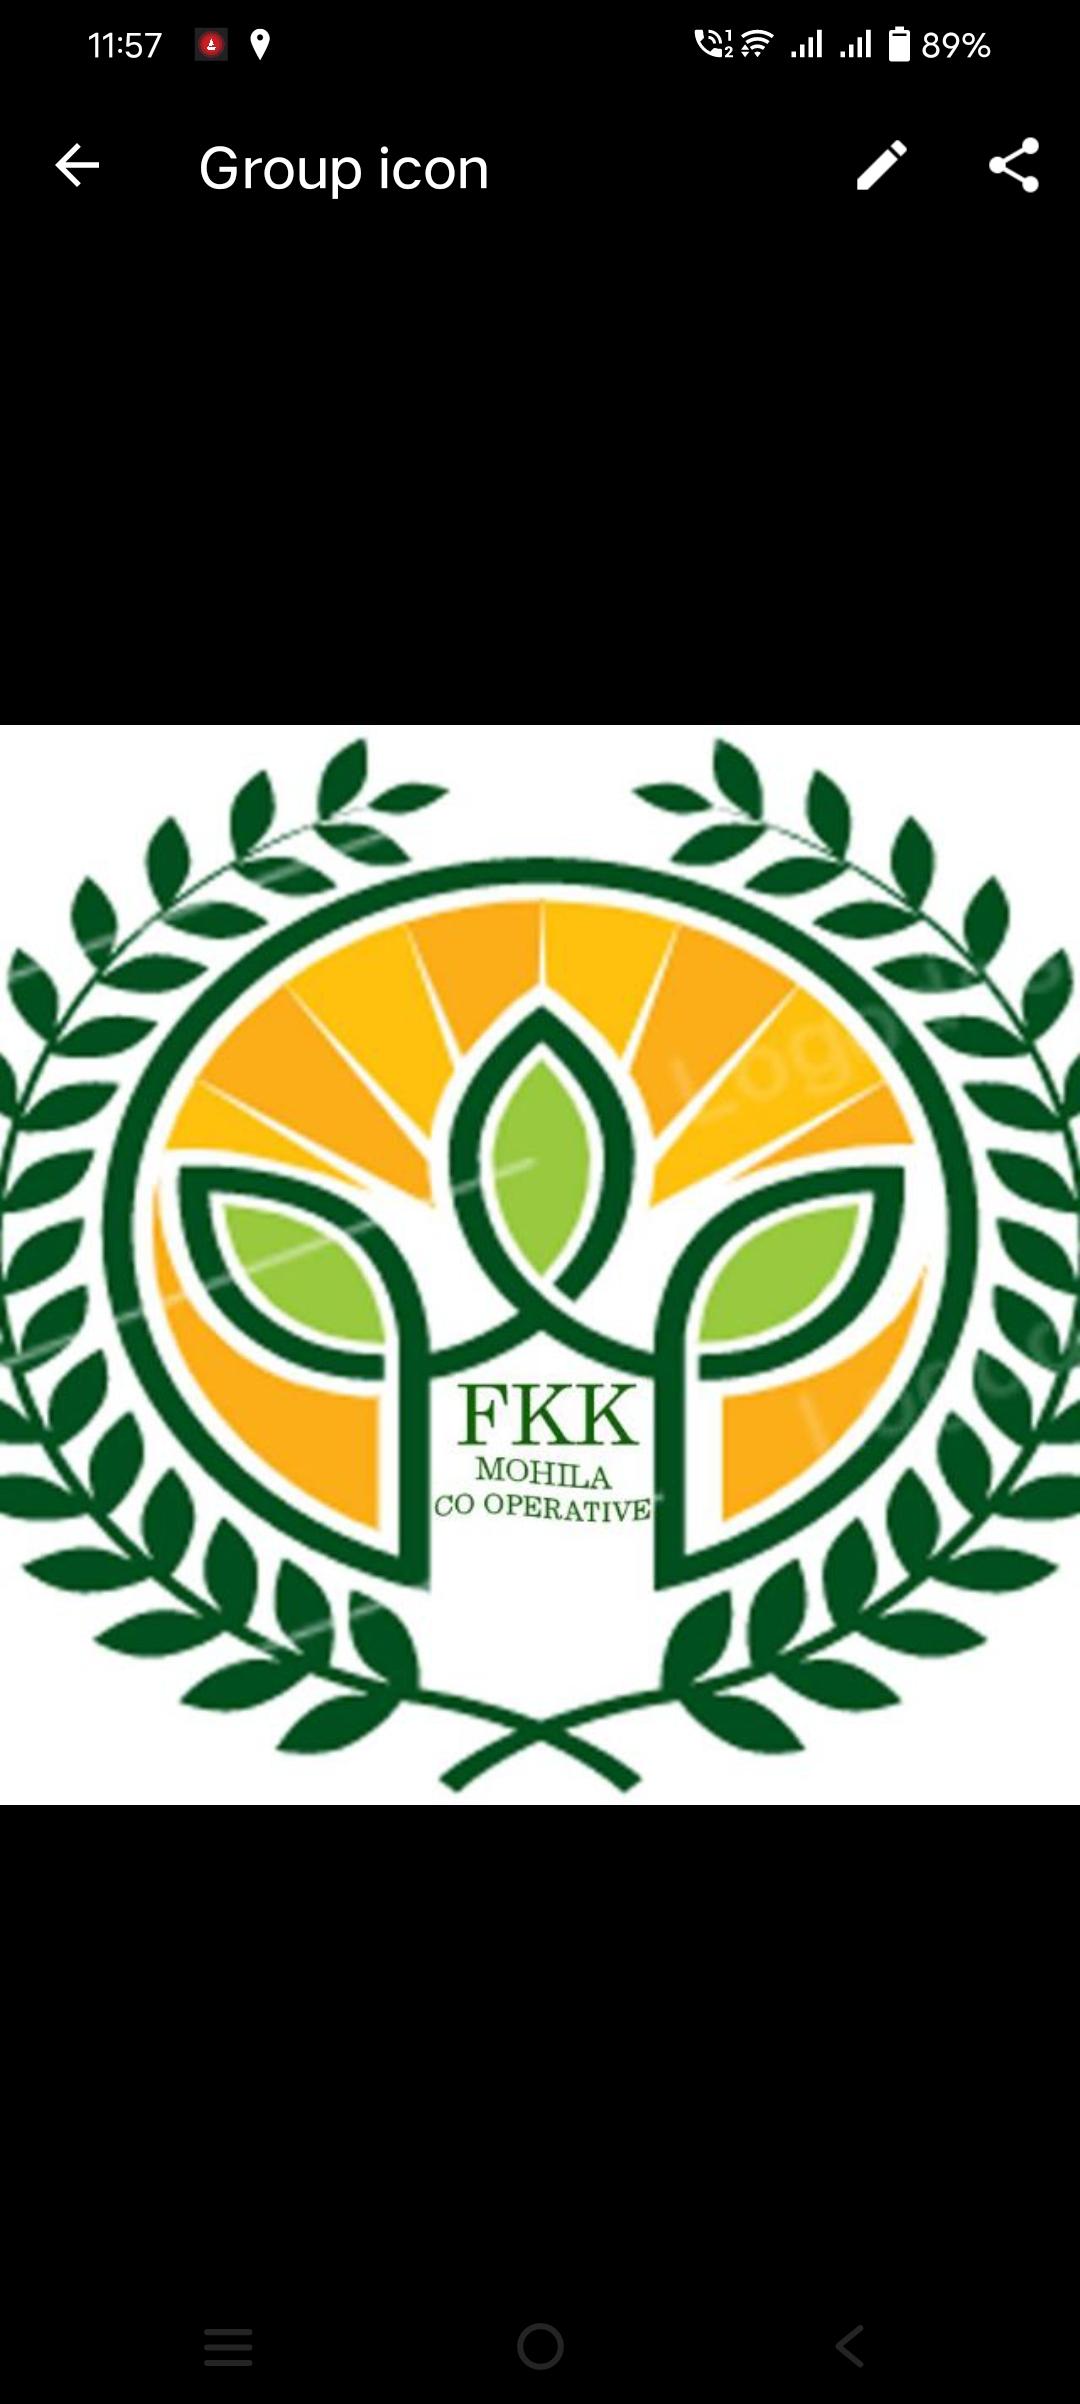   Farakka Mohila Co Operative Credit Society Ltd